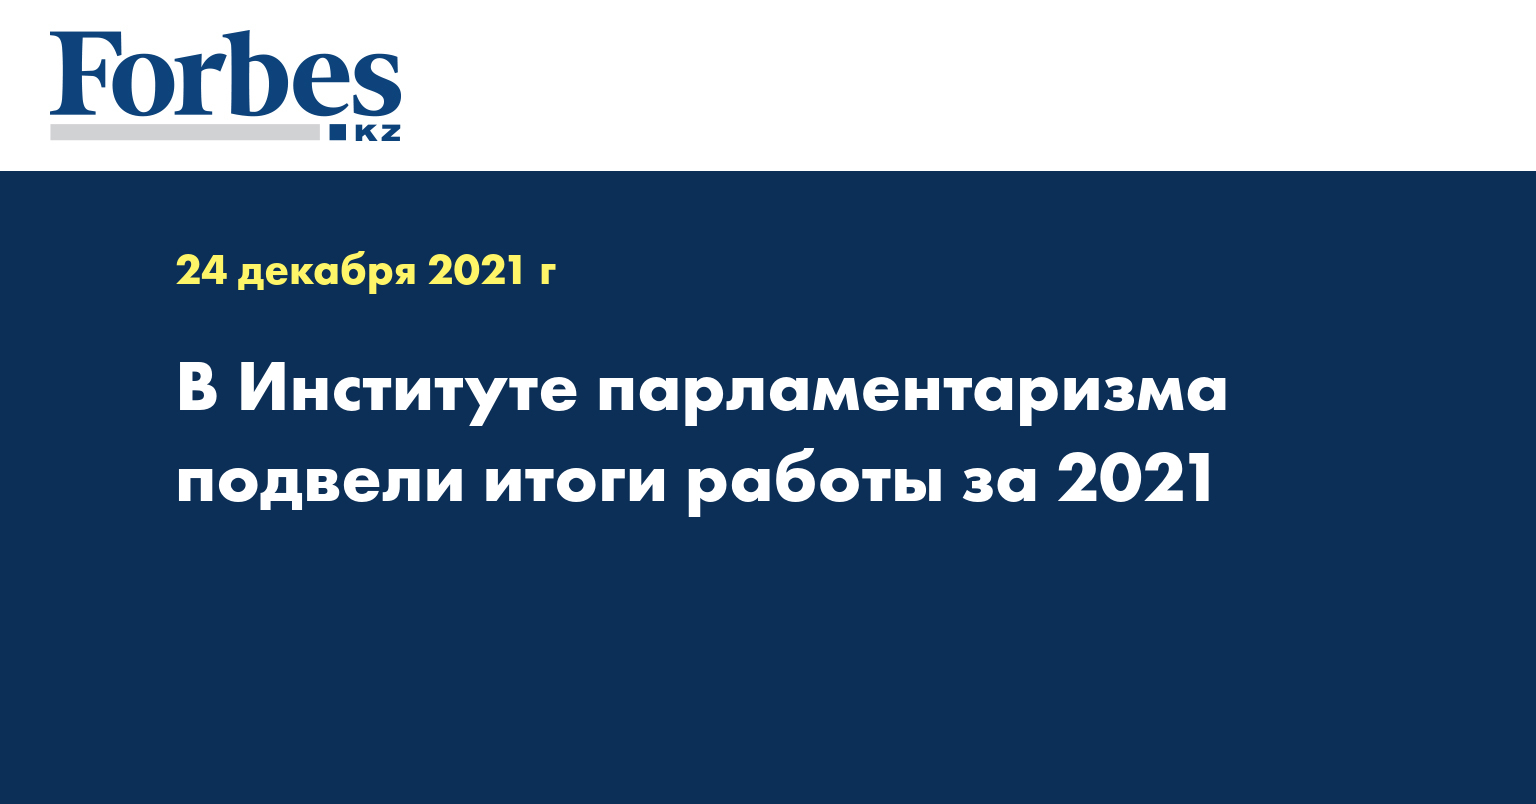 В Институте парламентаризма подвели итоги работы за 2021